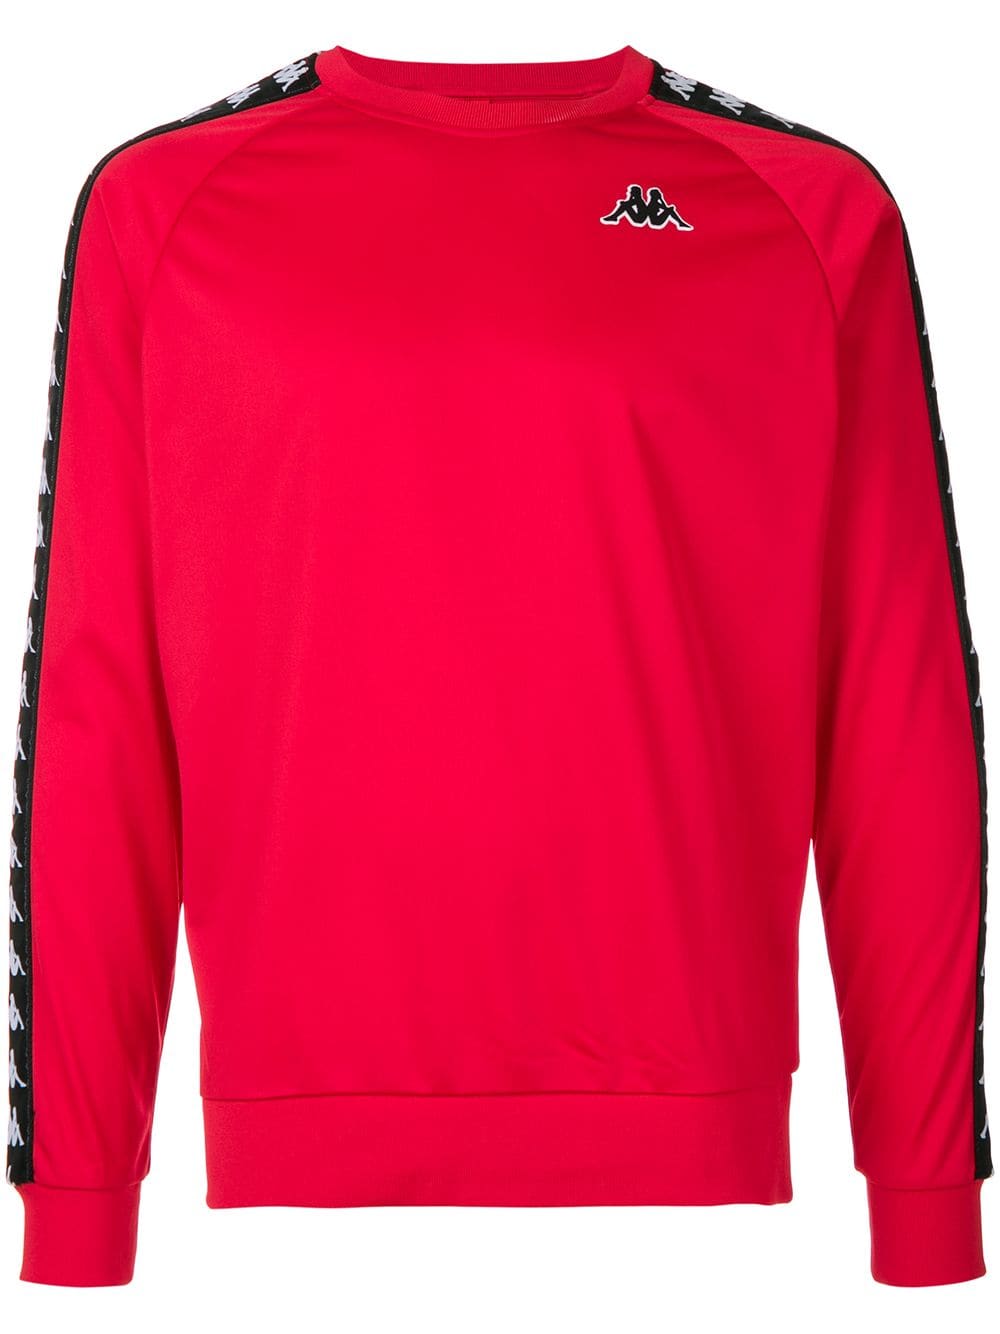 Red and White Kappa Logo - Kappa Logo Long-Sleeve Sweatshirt - Red | ModeSens